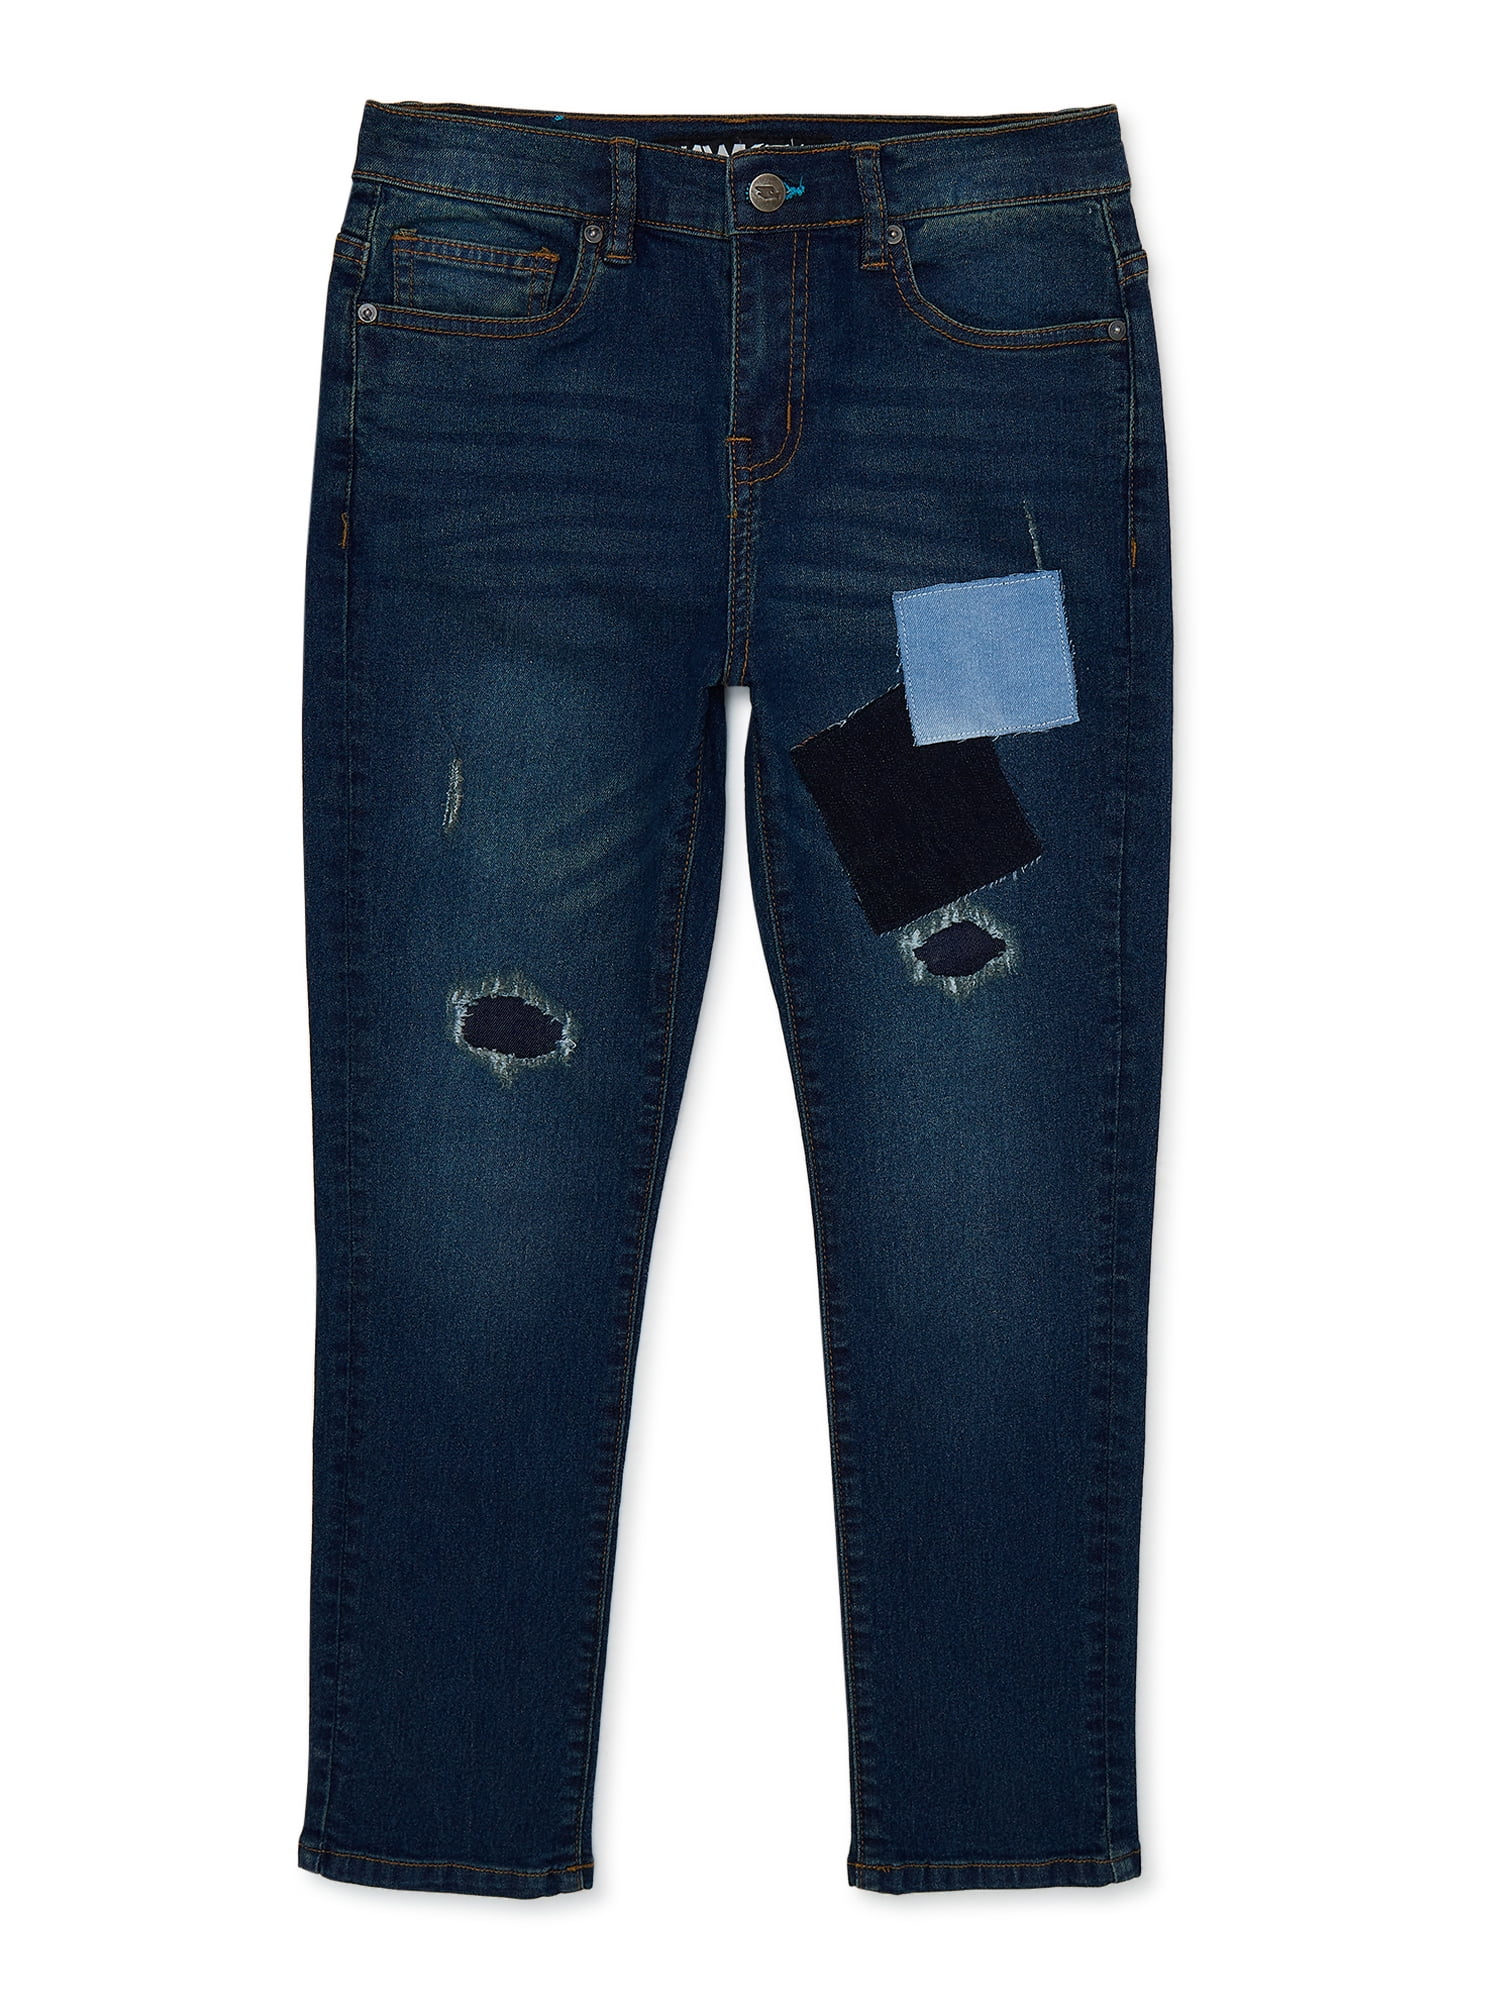 Tony Hawk Boys Patched Denim Jeans, Sizes 4-16 - Walmart.com